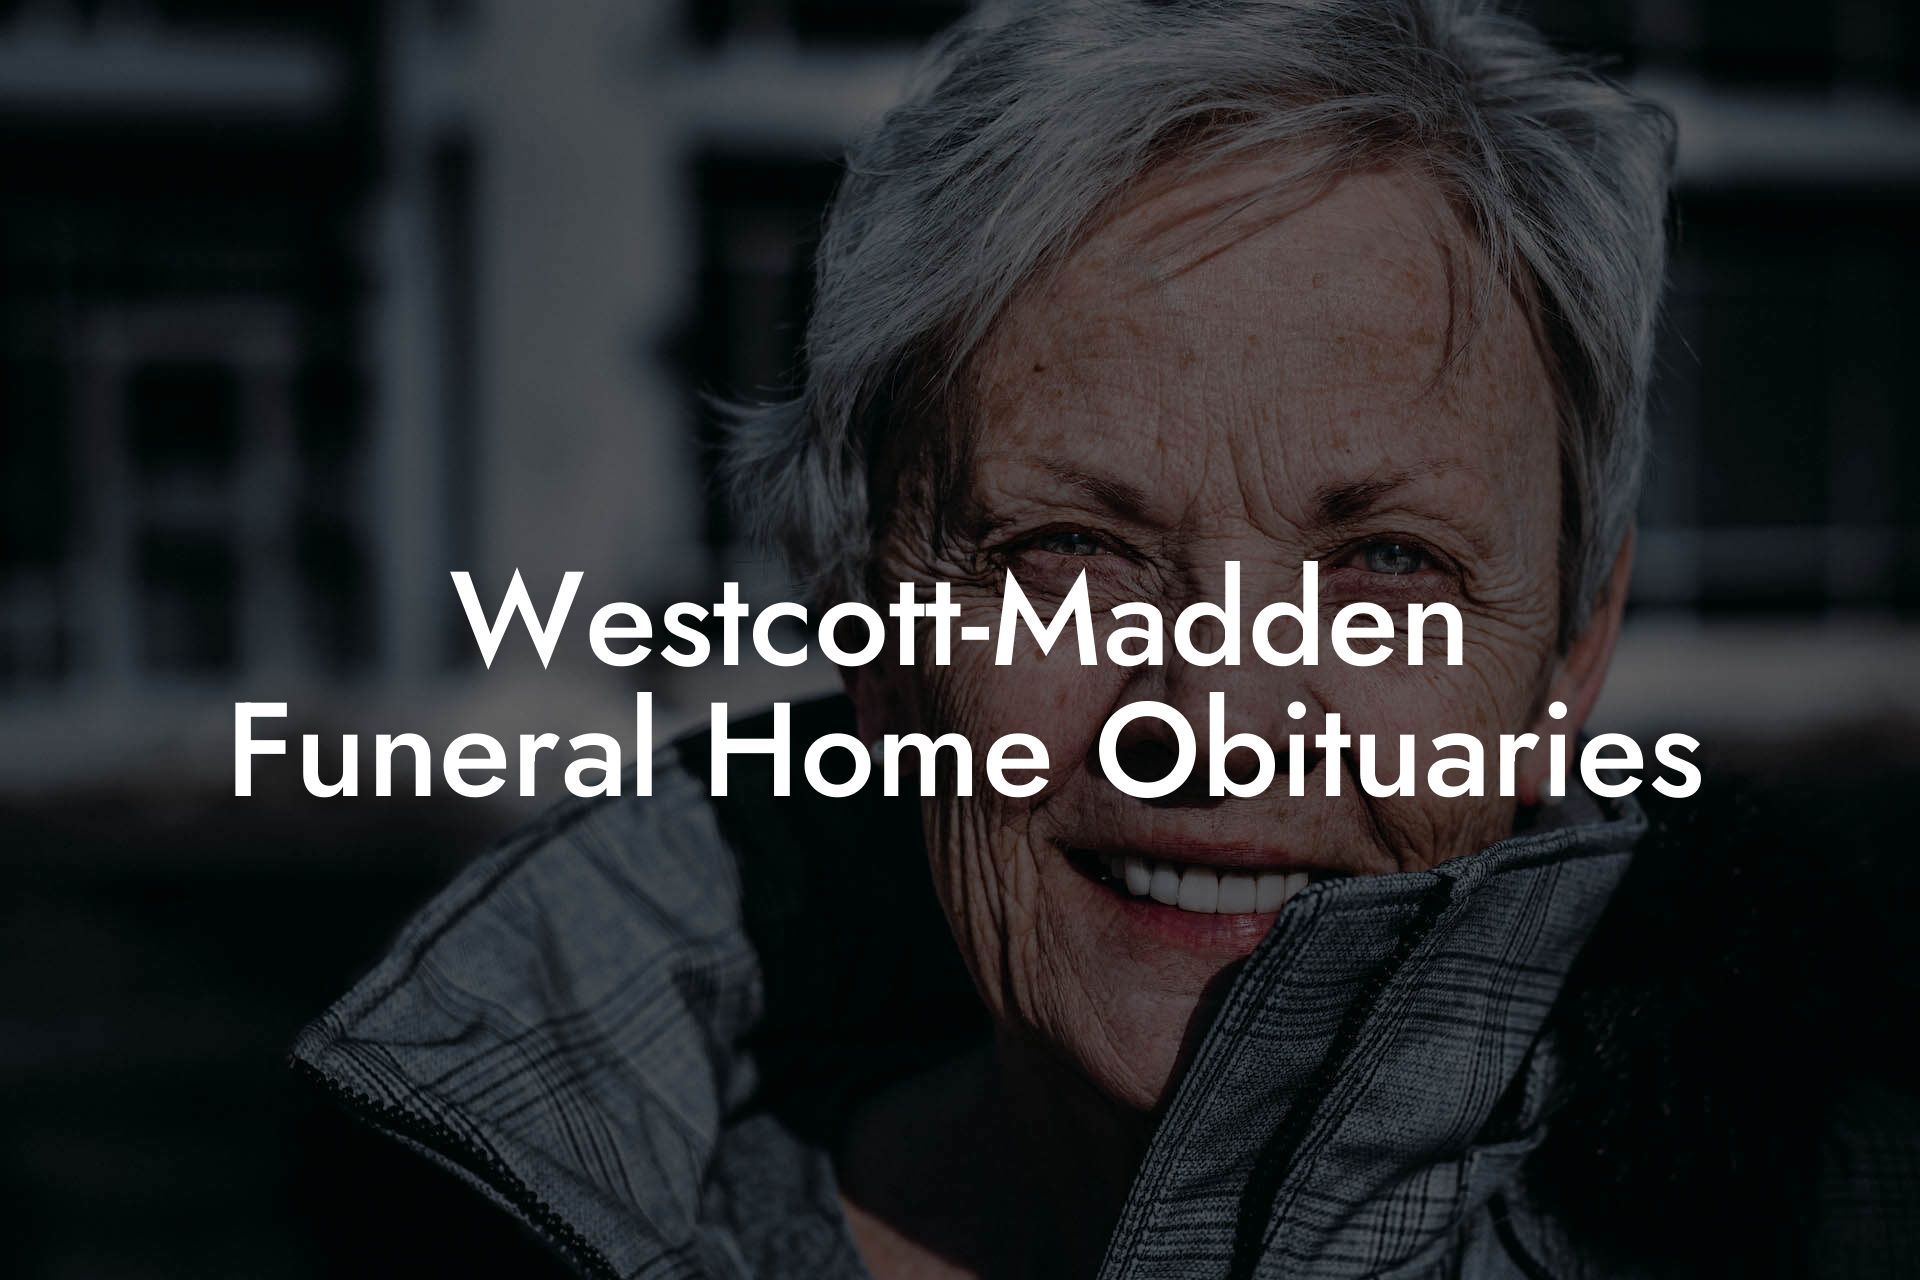 Westcott-Madden Funeral Home Obituaries